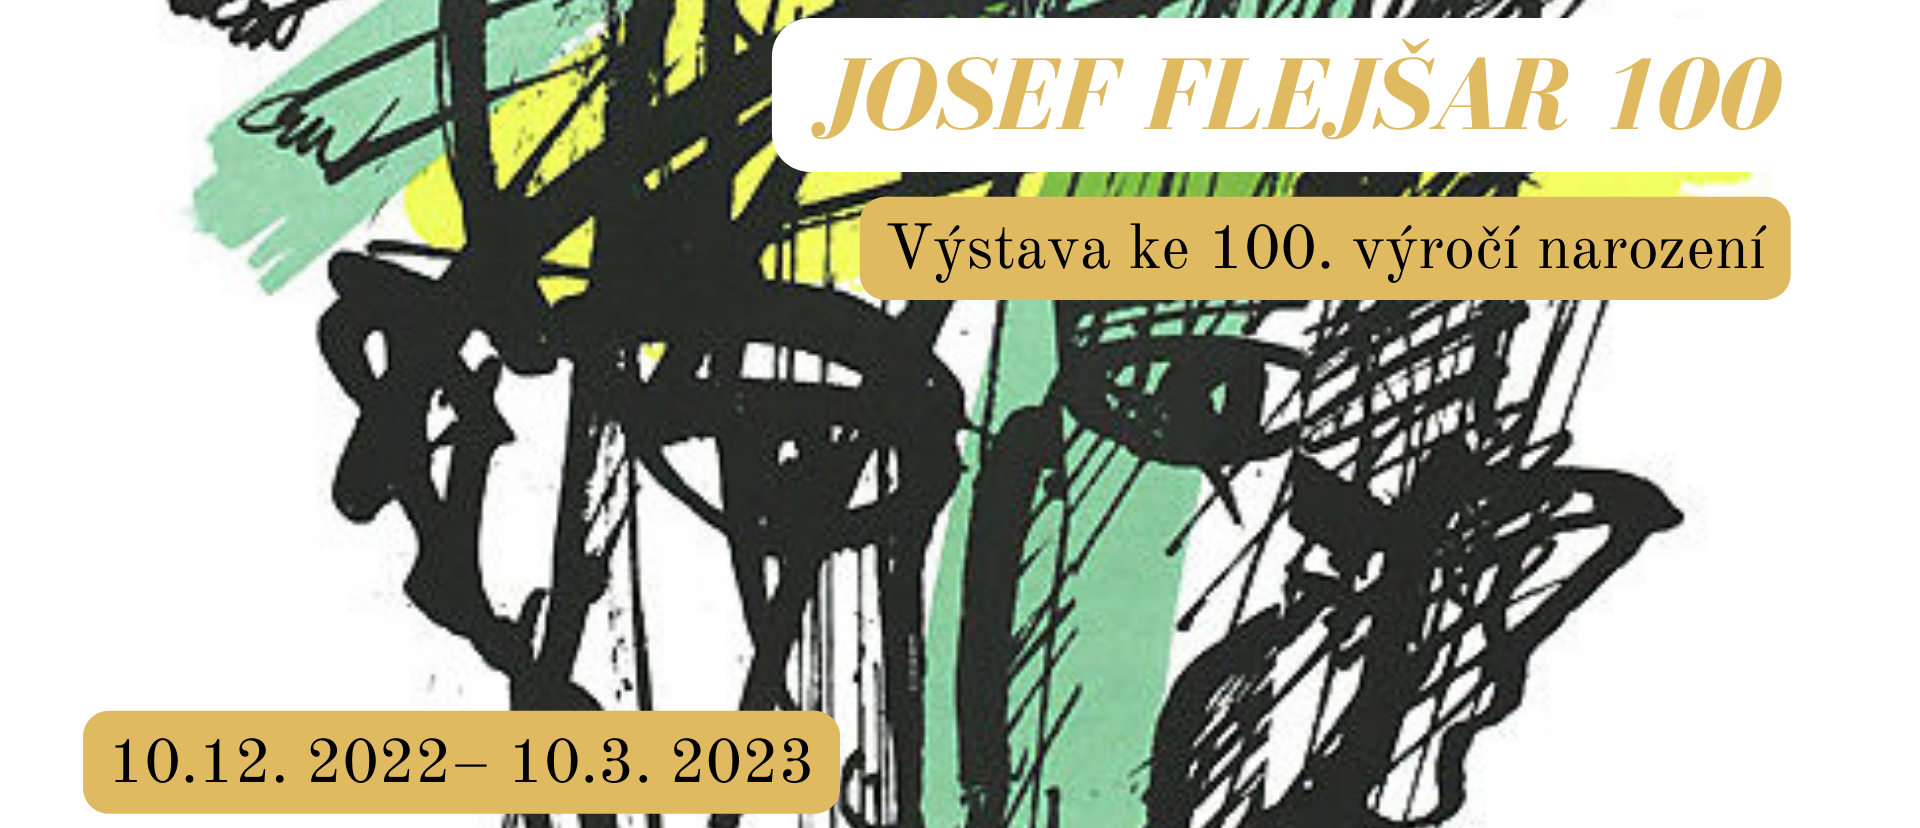 JOSEF FLEJŠAR 100